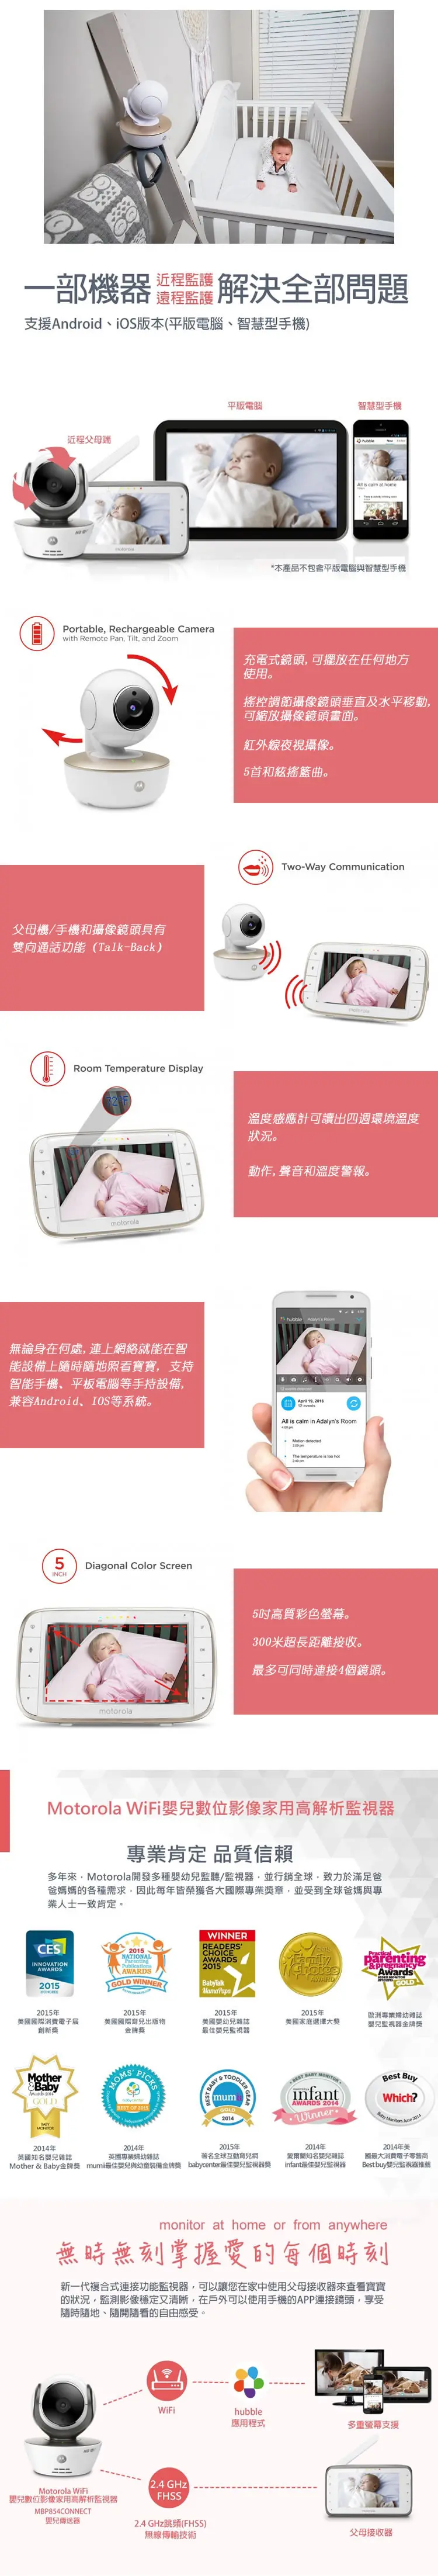 Motorola 婴儿影像监视器连父母机(WIFI版)